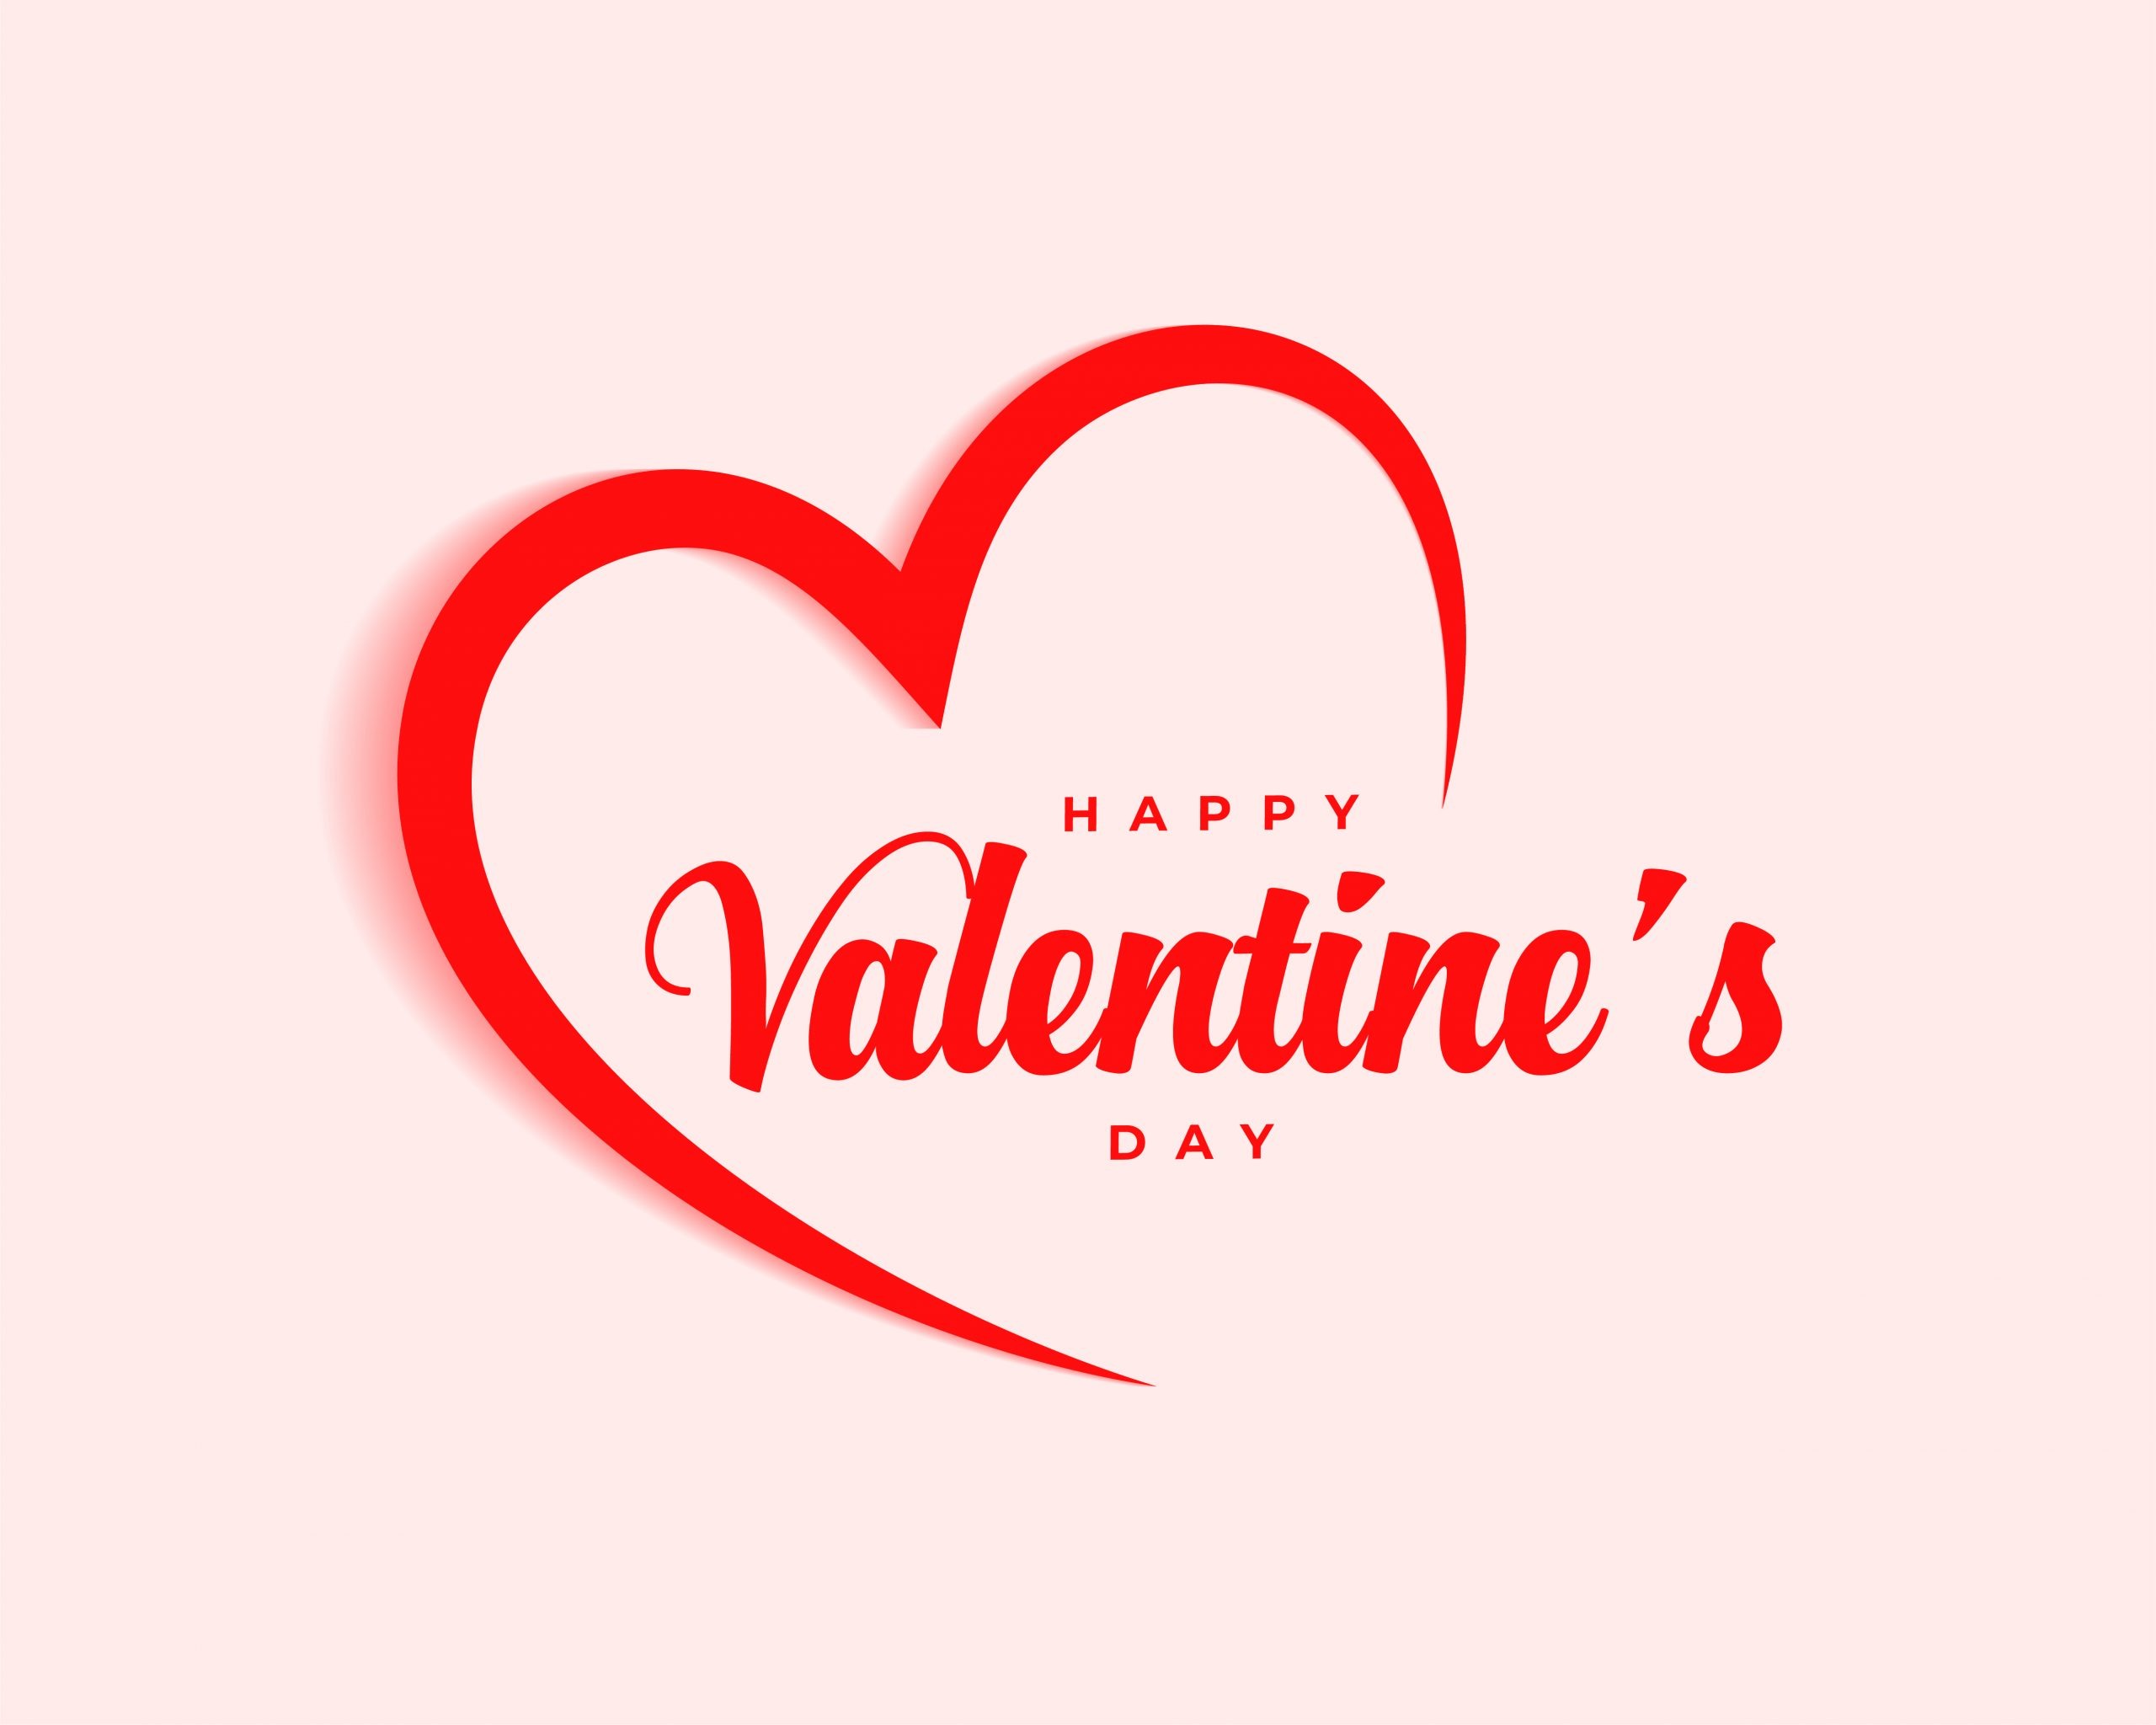 Happy Valentines Day Image Download